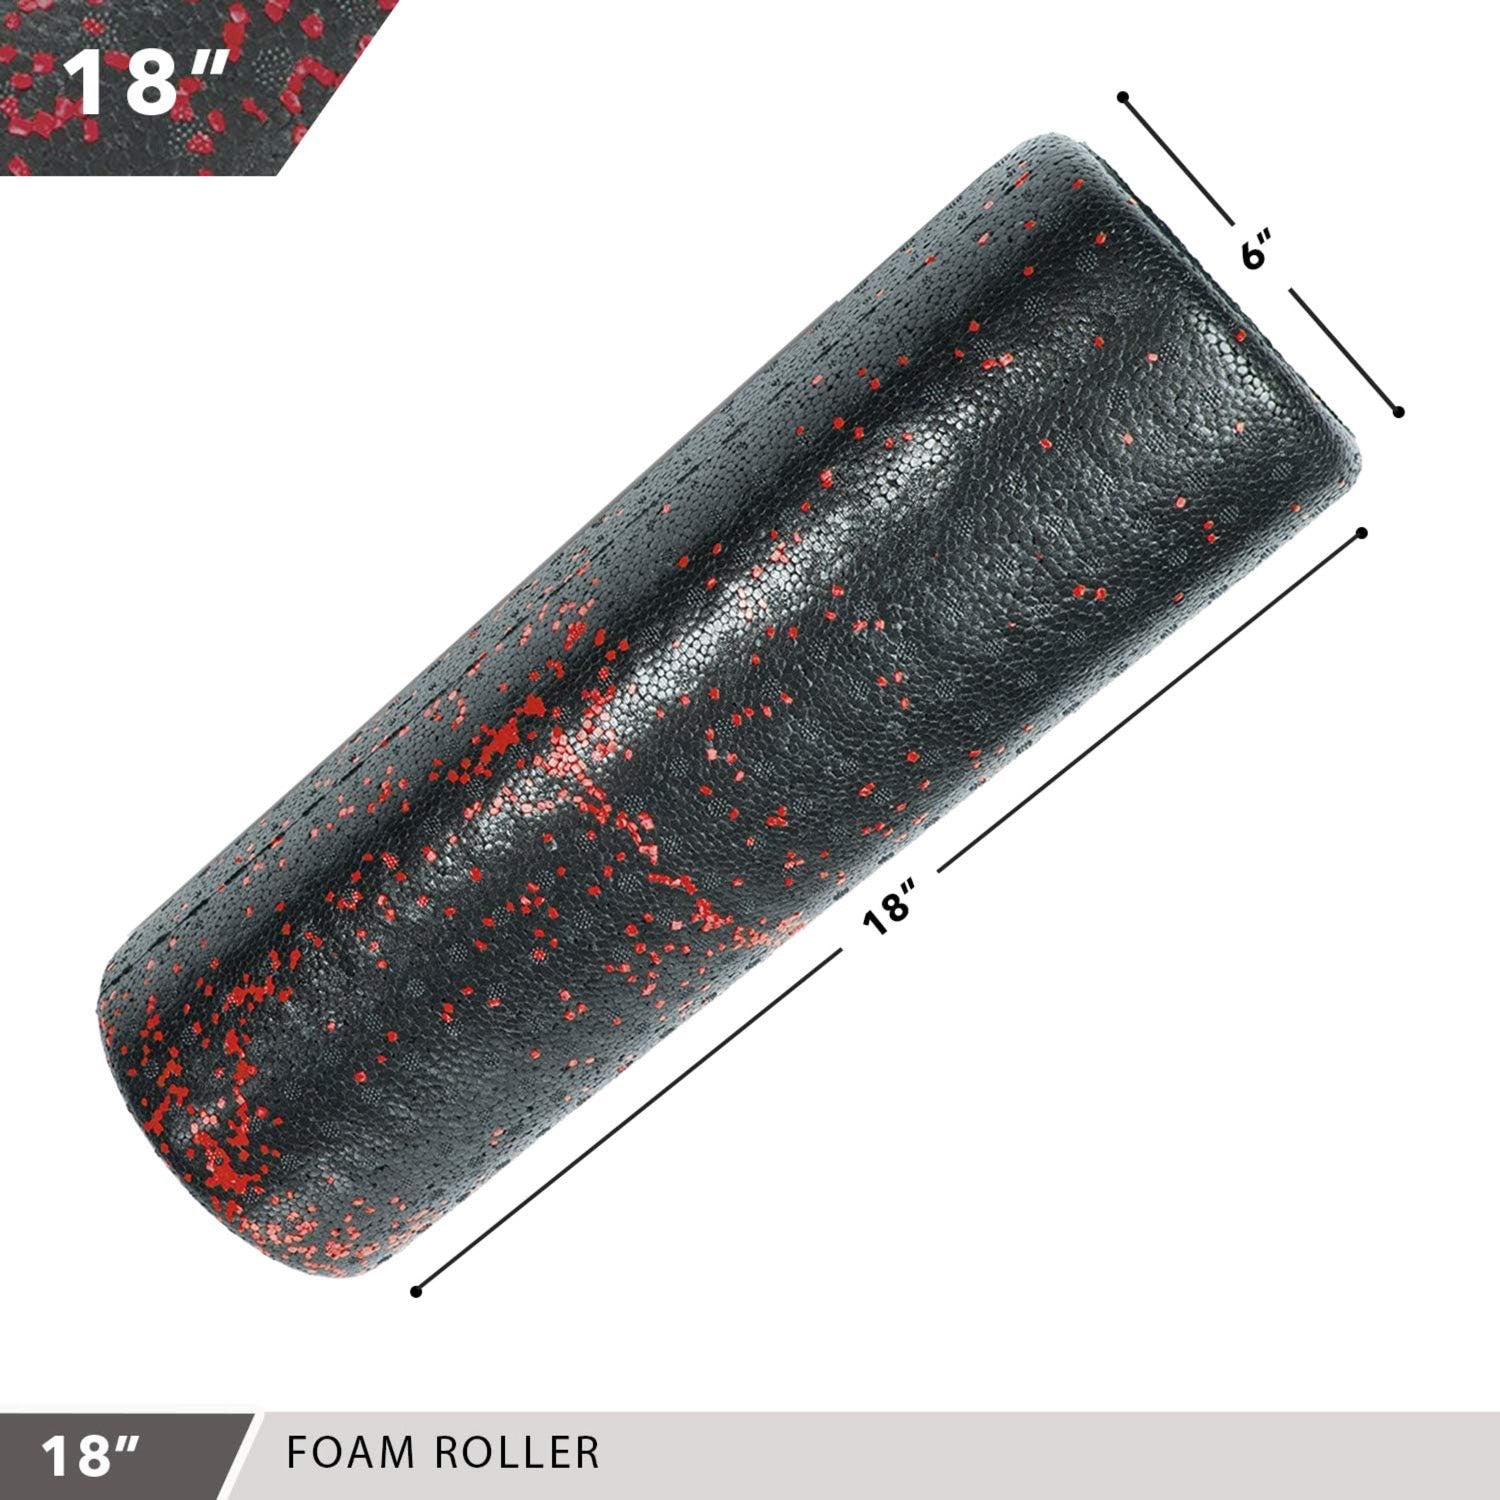 High-Density Foam Roller 18" Speckled Red Day 1 Fitness